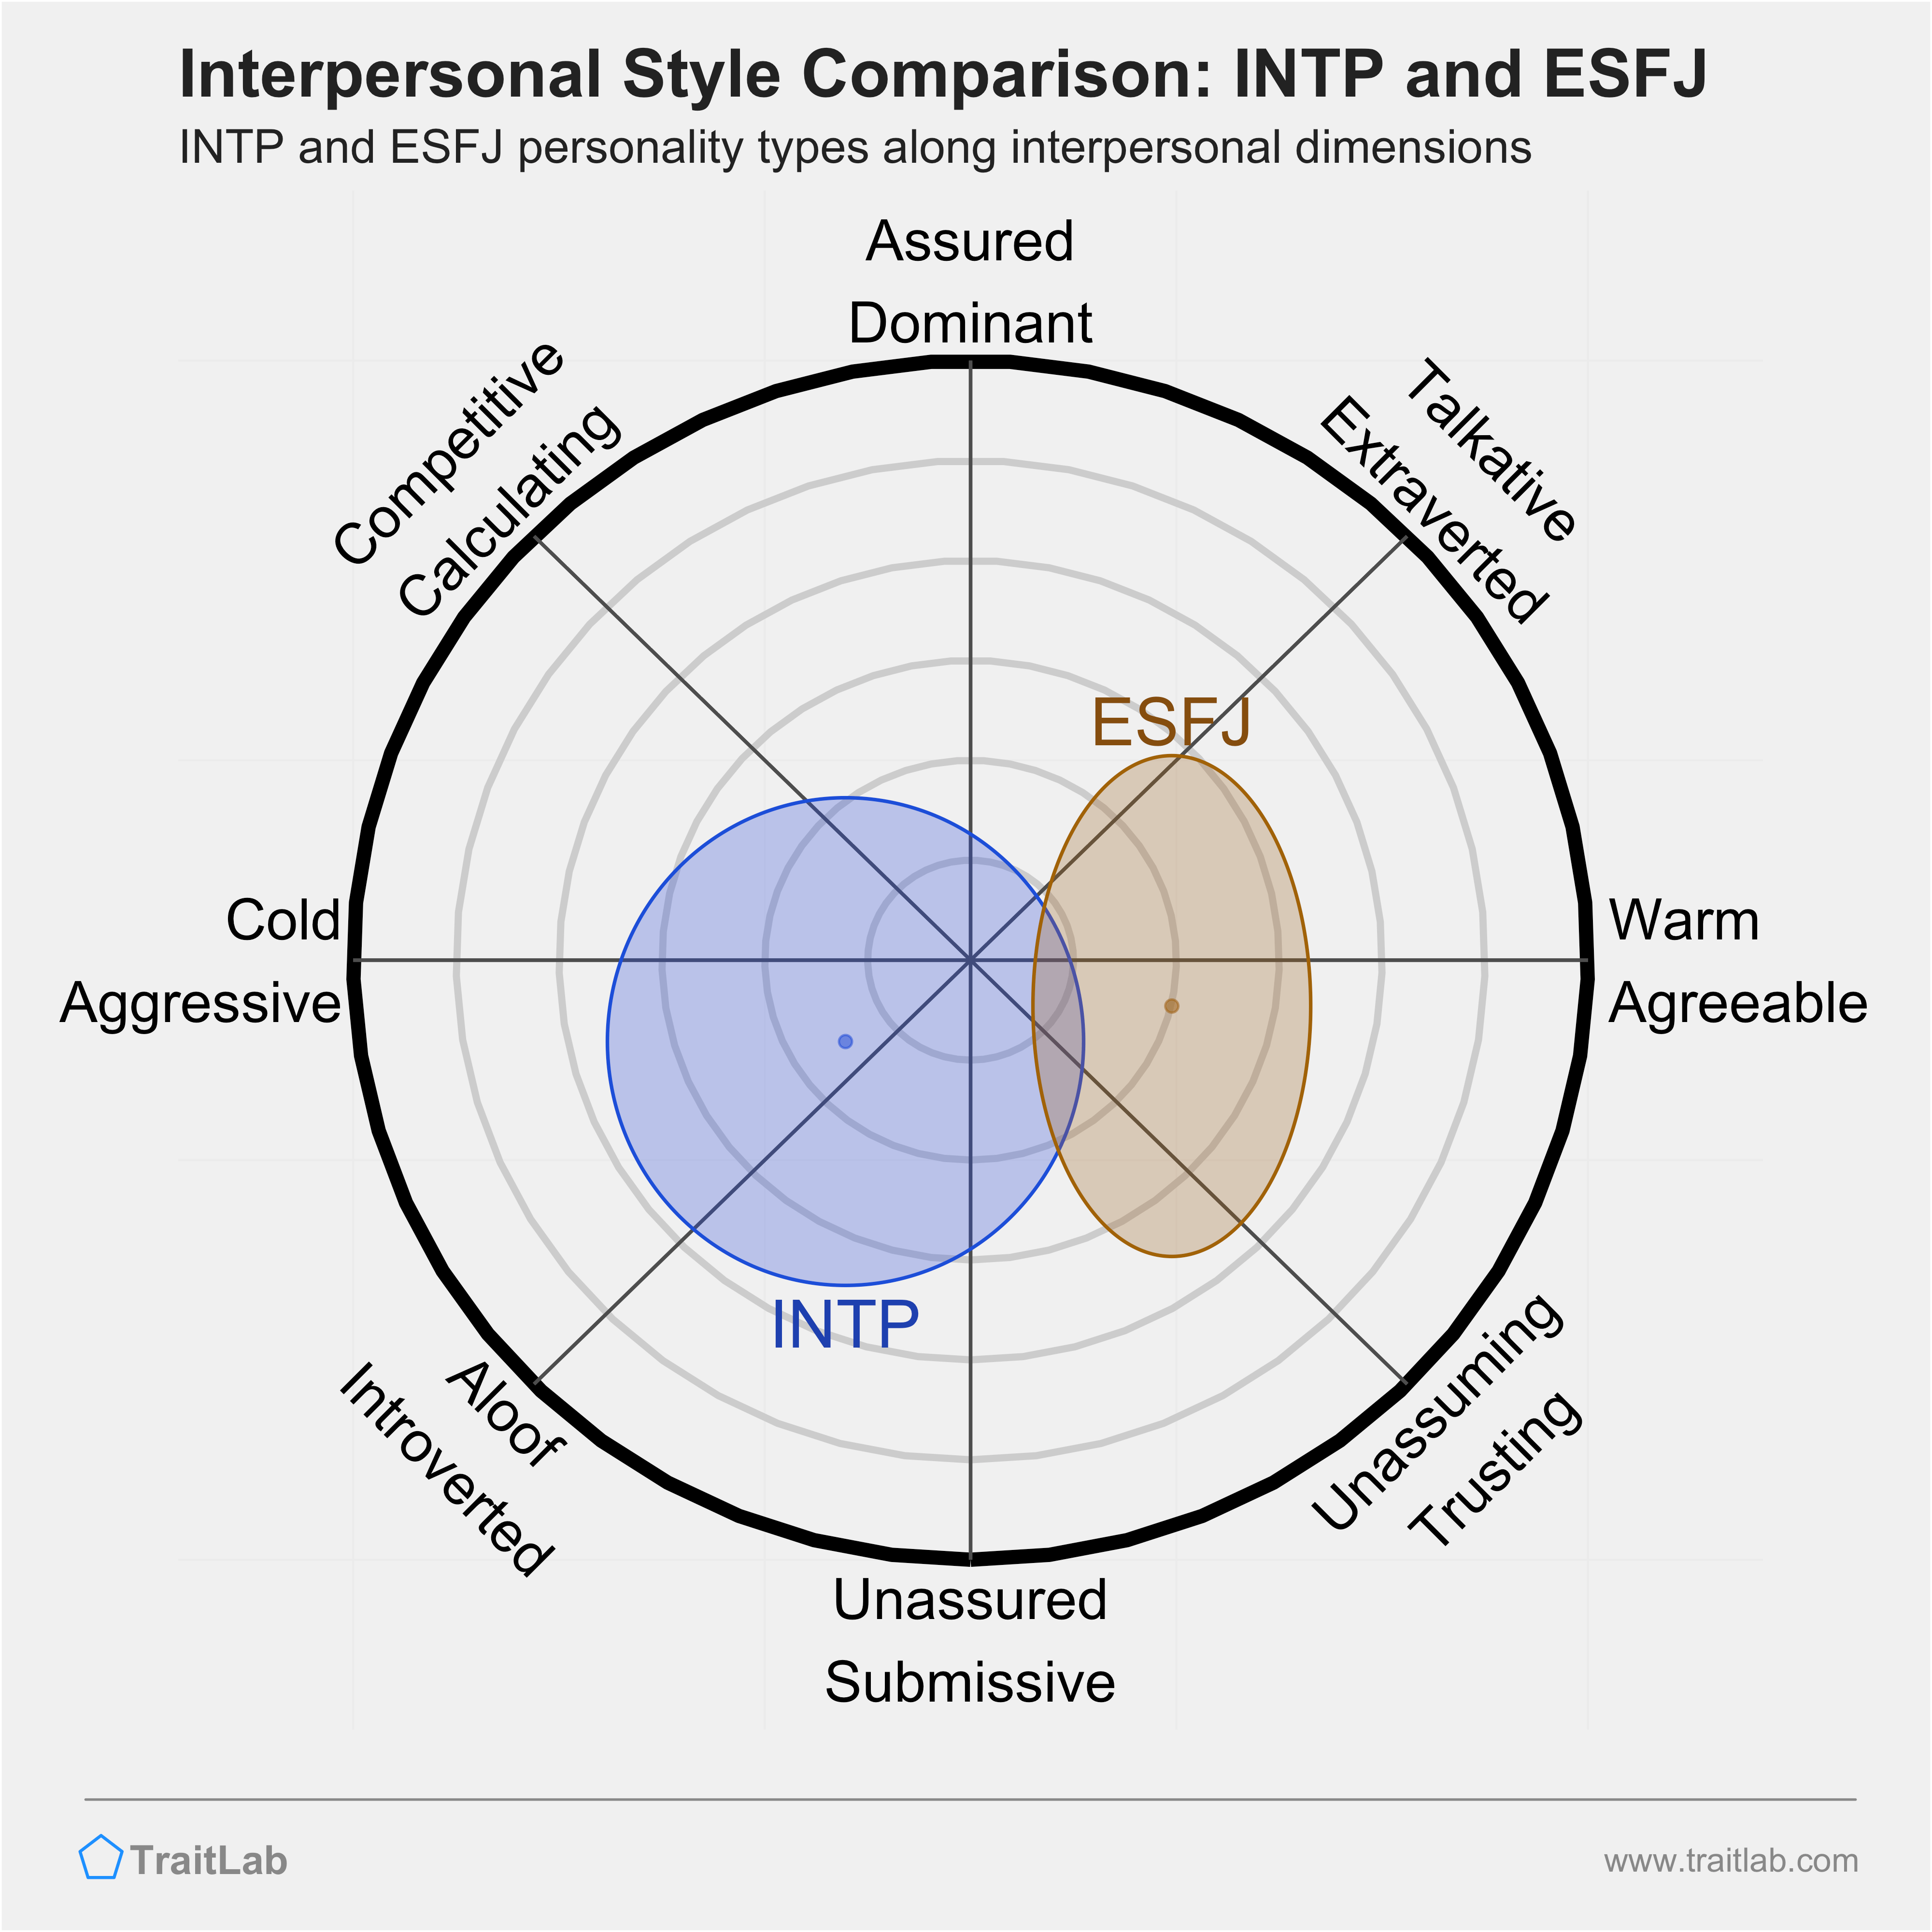 INTP and ESFJ comparison across interpersonal dimensions